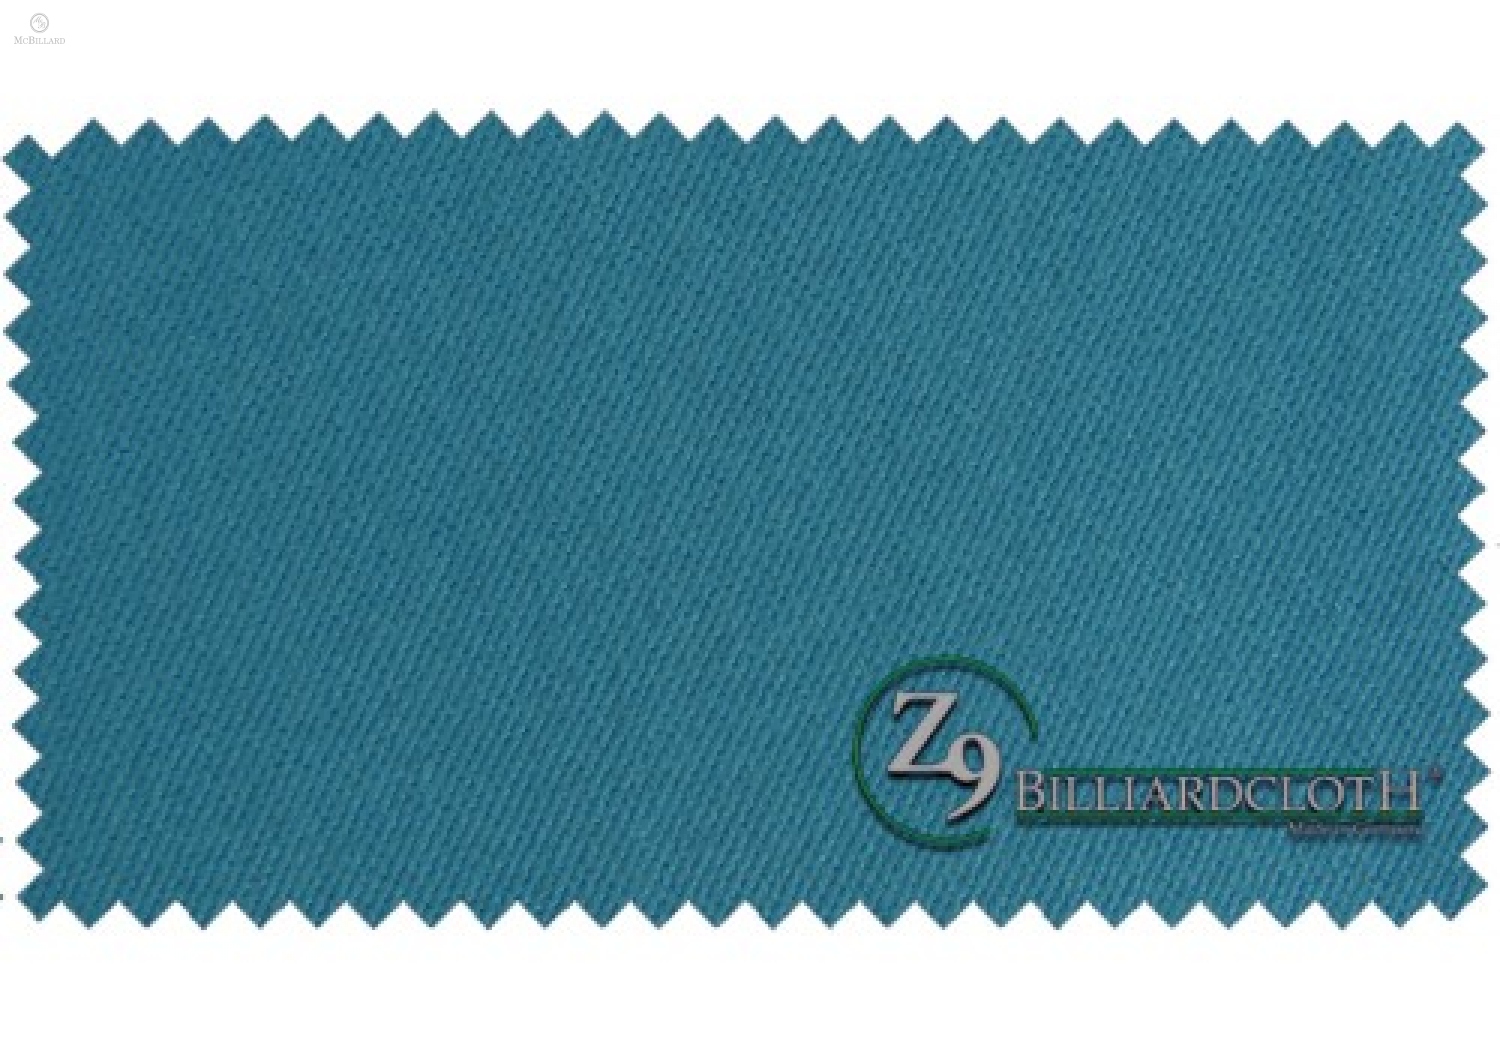 Billiards Cloth Z9 BilliardCloth® - 170 cm width, Powder Blue